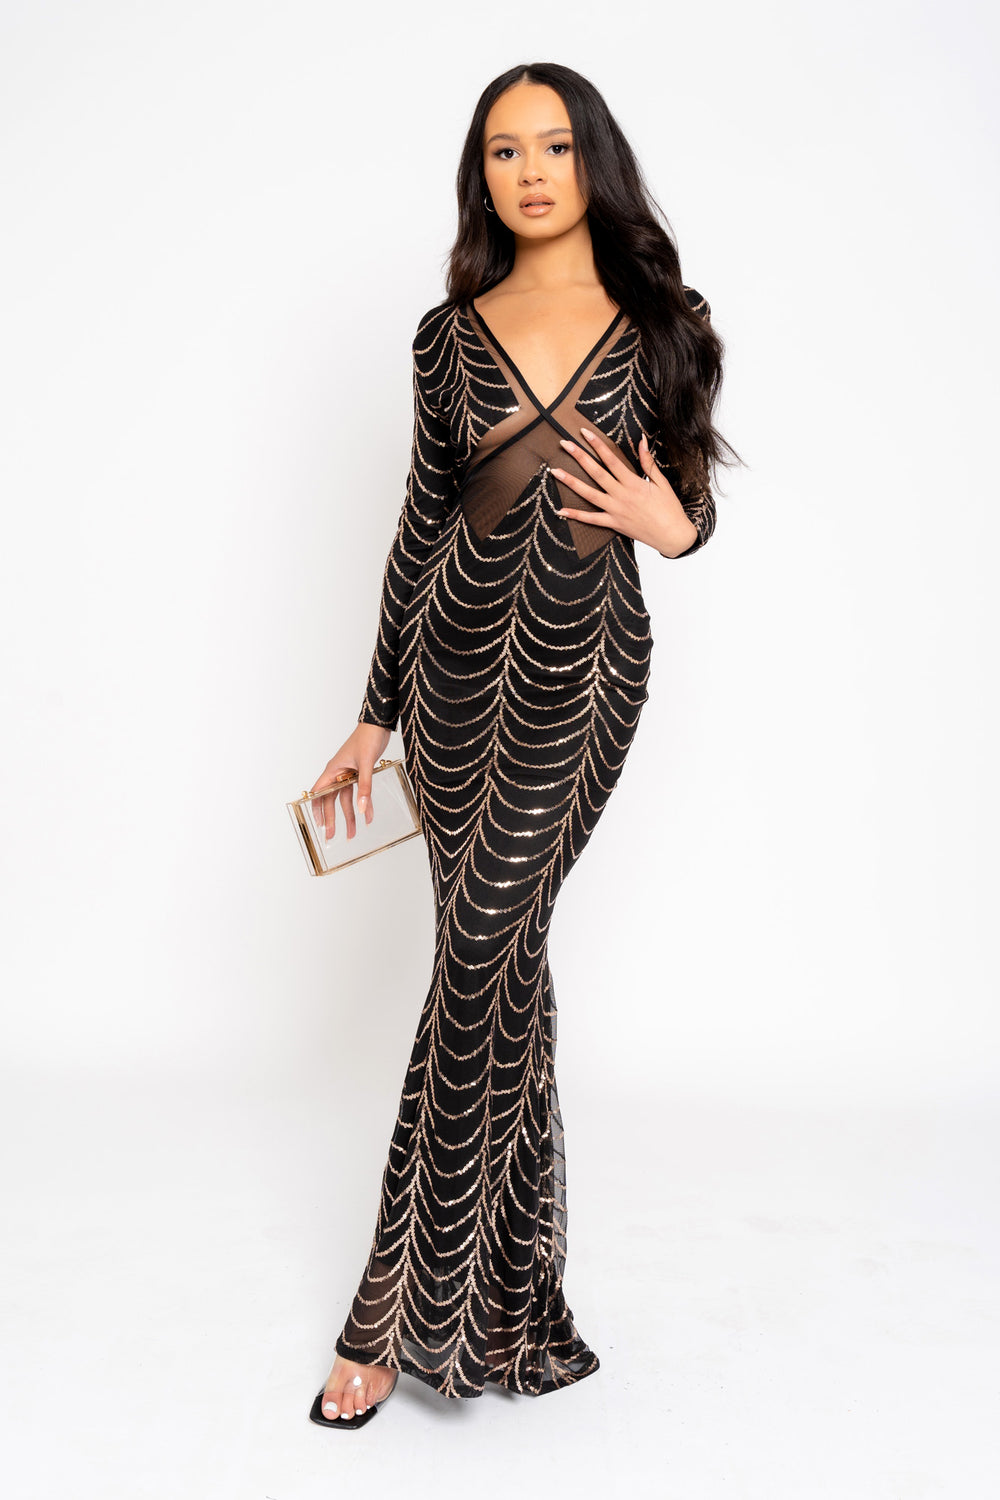 Darkest Secret Black Rose Gold Luxe VIP Embellished Illusion Sheer Mesh Long Sleeve Mermaid Maxi Dress